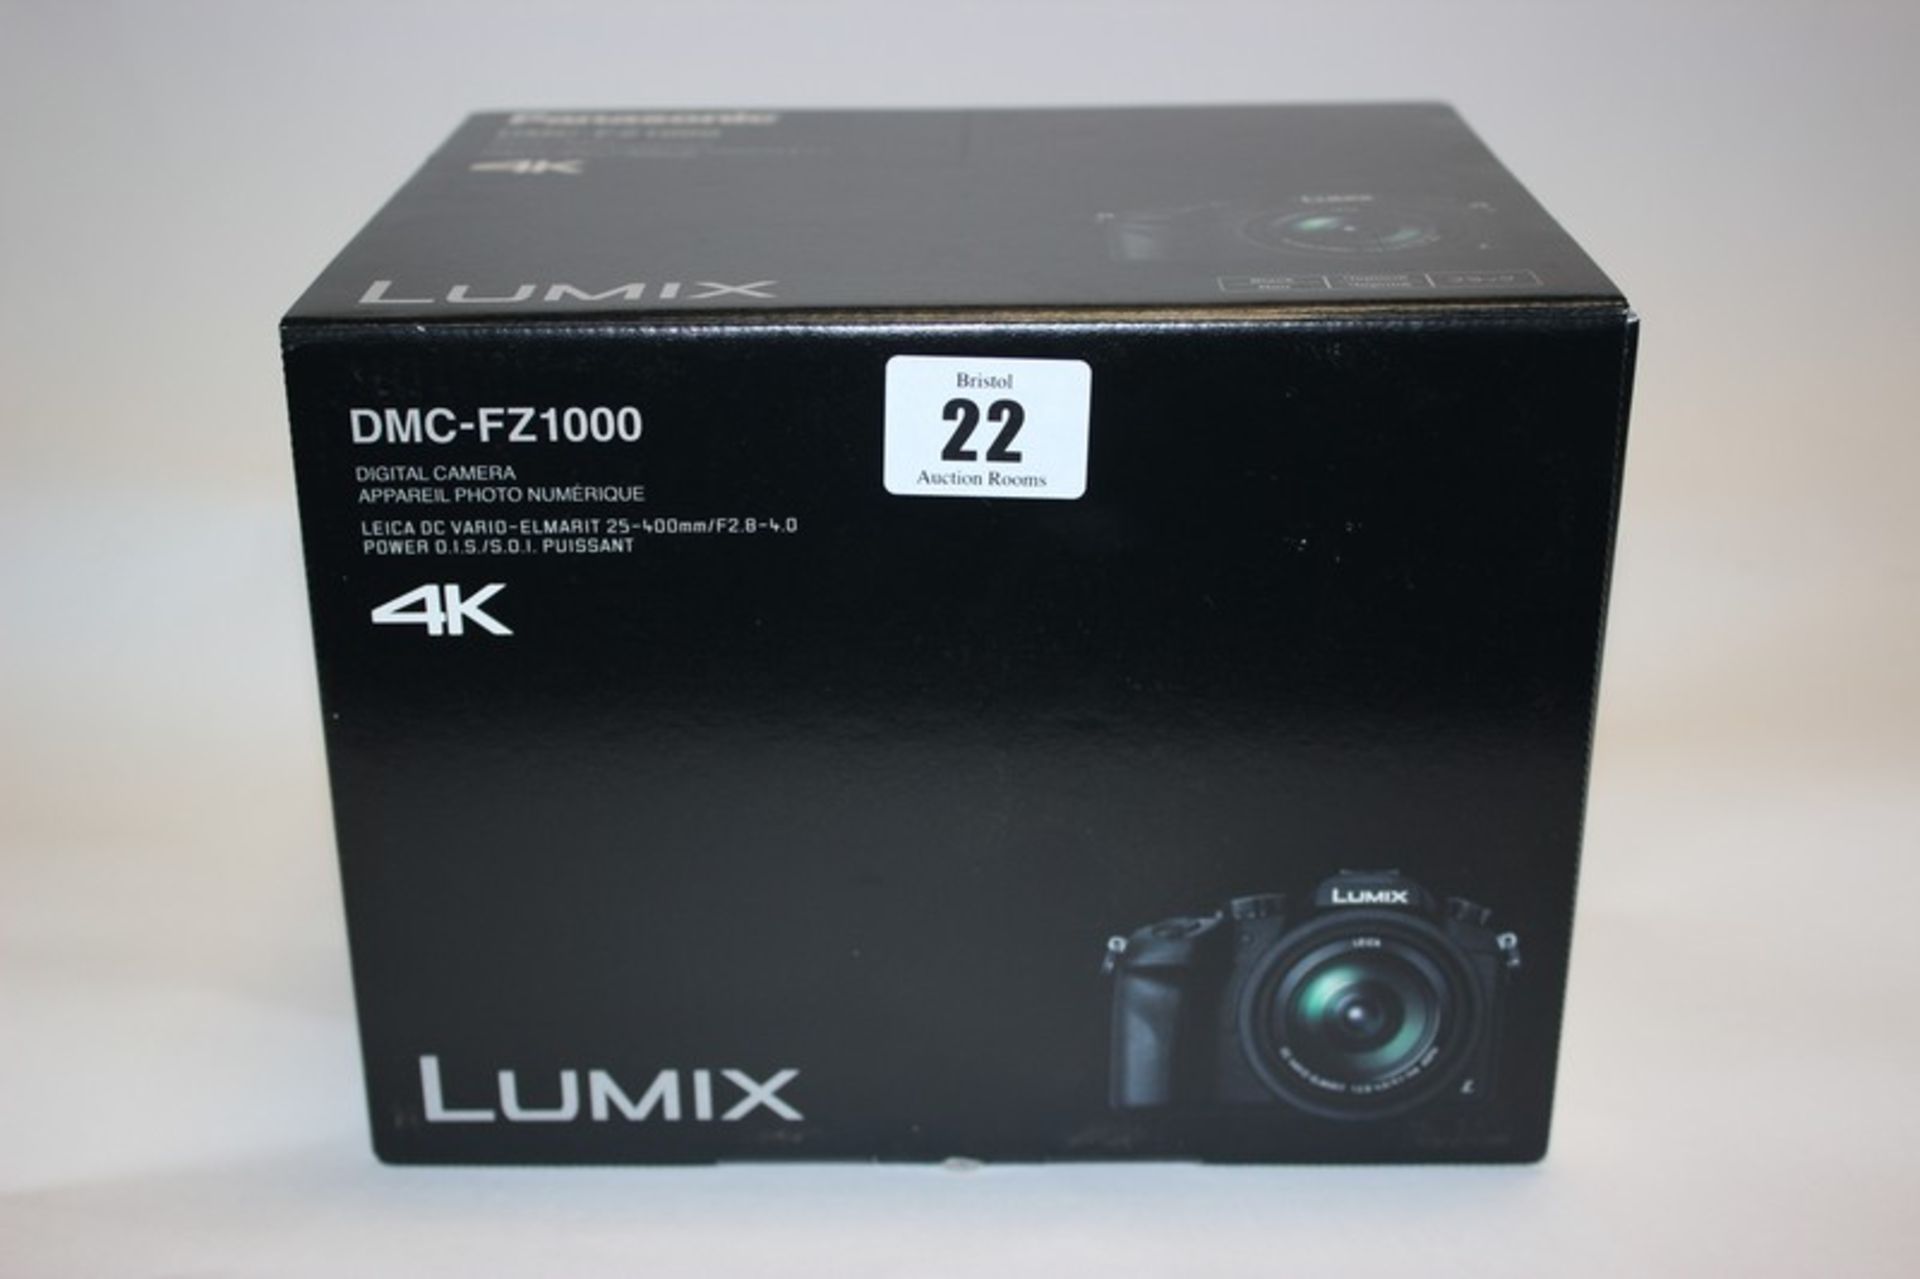 A Panasonic Lumix DMC-FZ1000 digital camera (Boxed as new).